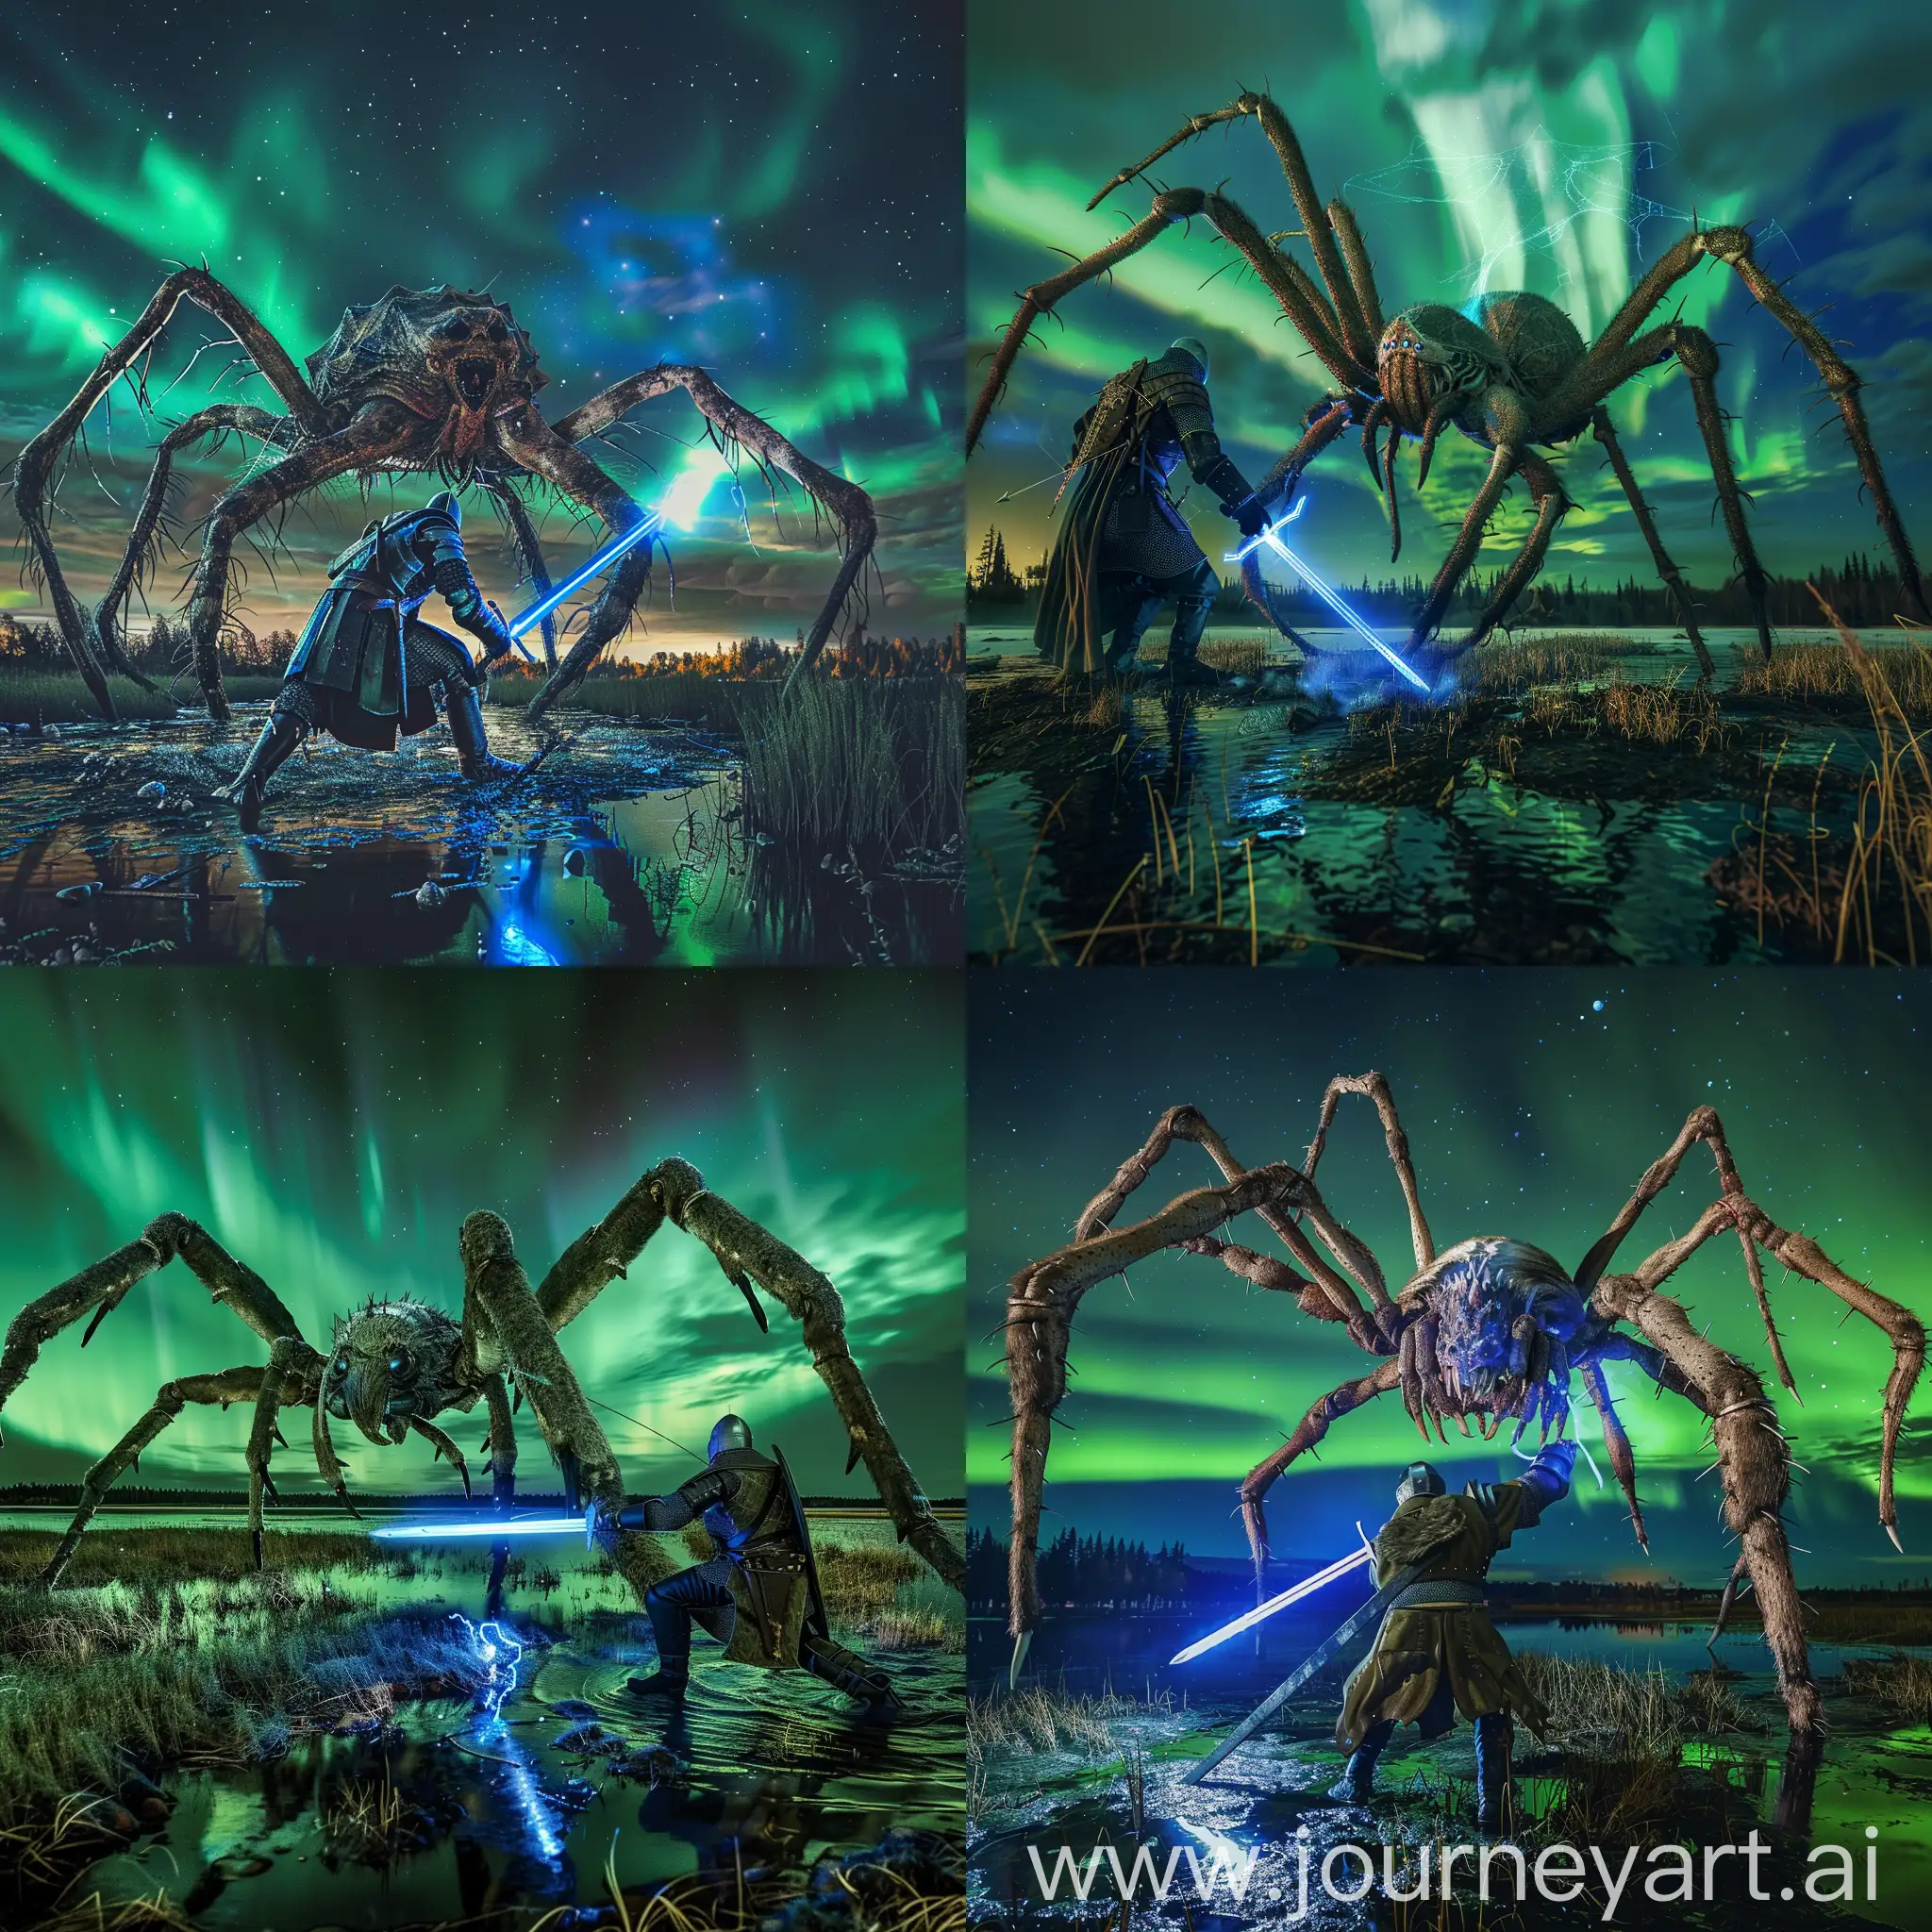 Epic-Medieval-Monster-Hunter-Battles-Giant-Spider-Monster-Amidst-Northern-Aurora-in-Dark-Swamp